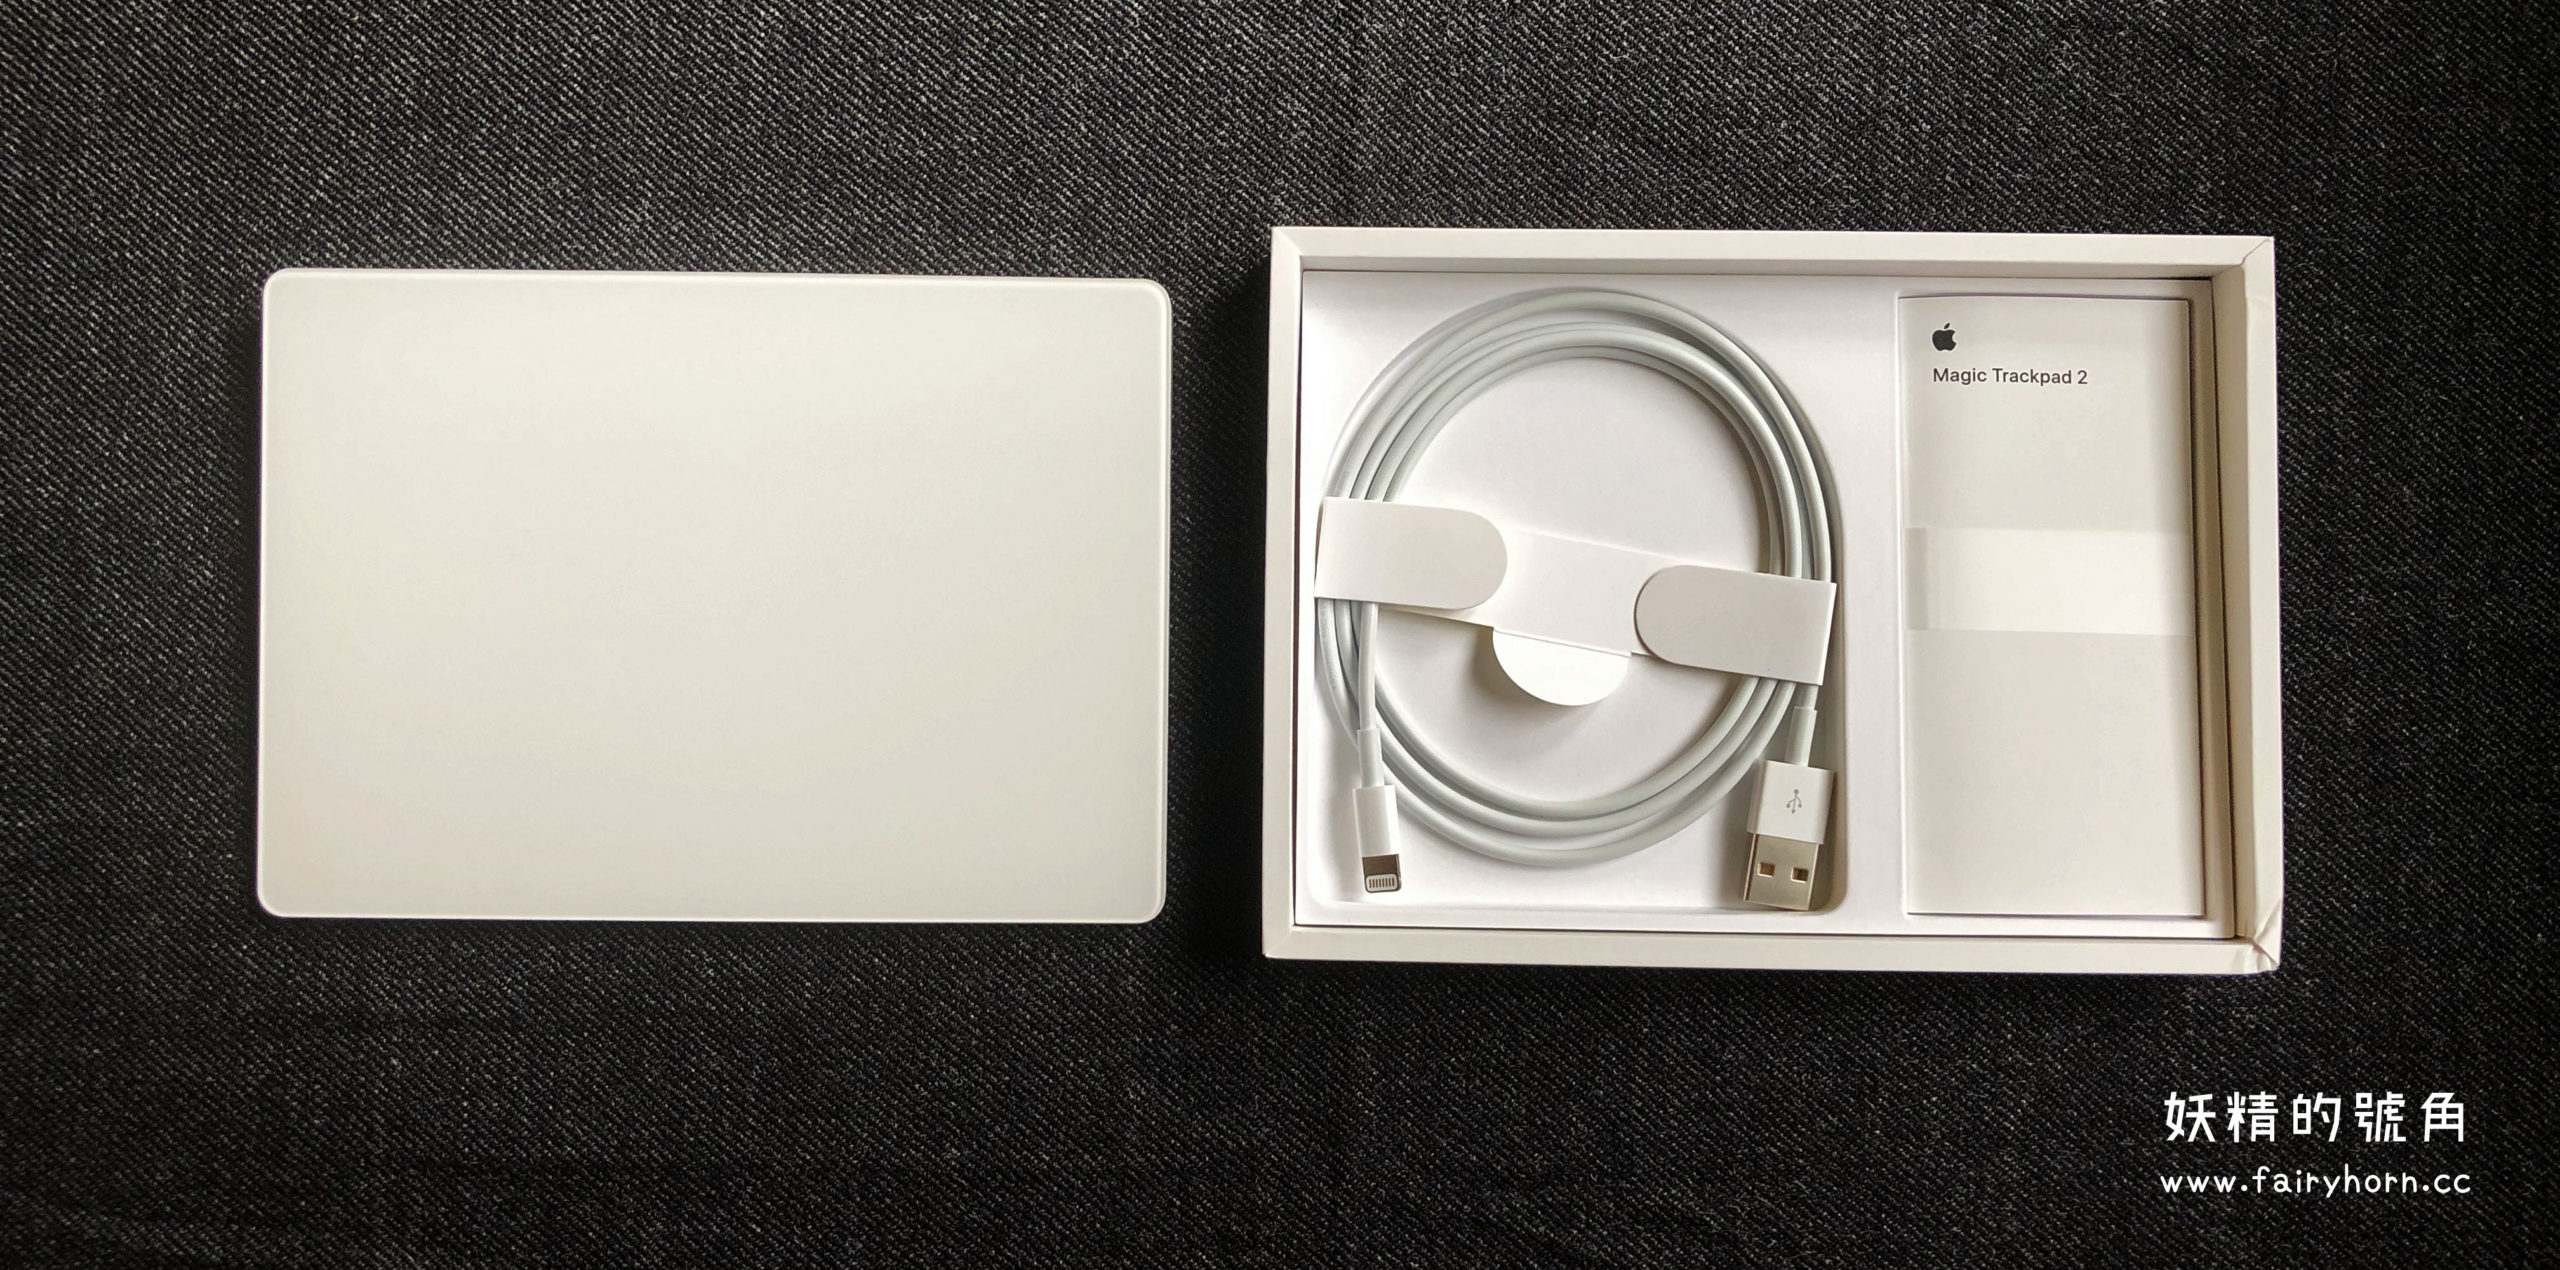 4 scaled - 【開箱】Apple Magic Trackpad 2 - 蘋果巧控板在windows10上使用心得！（附教學與驅動程式）